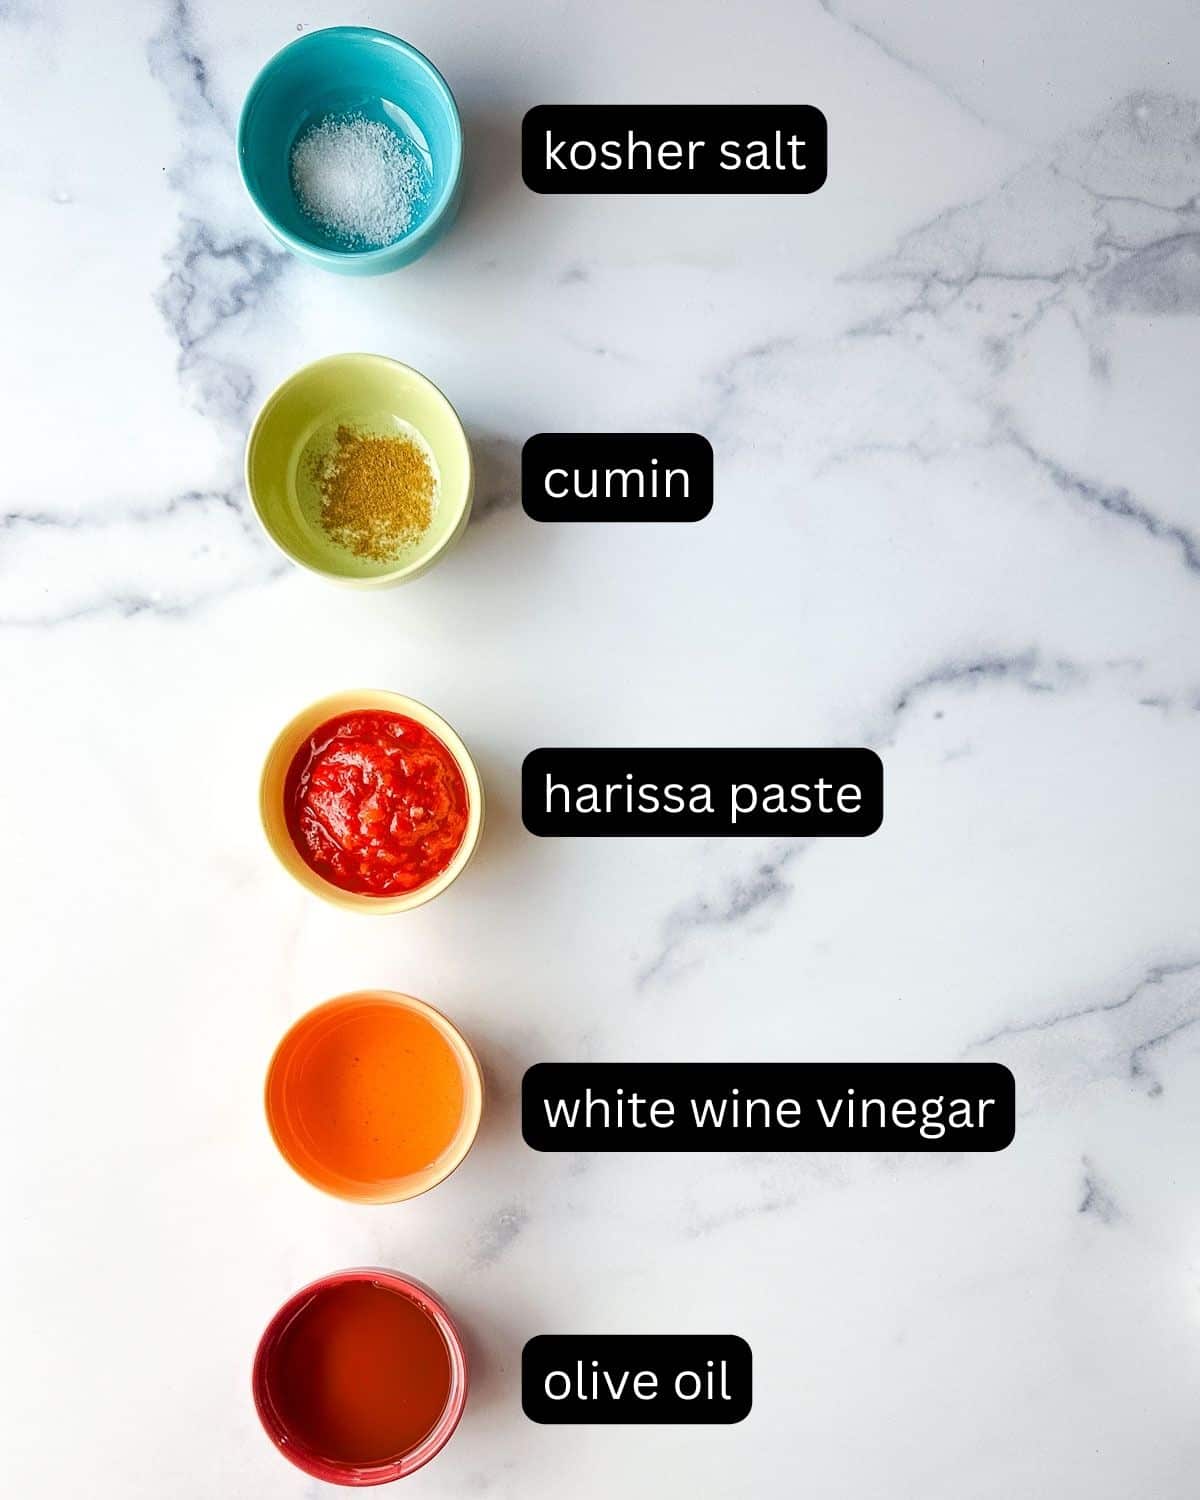 The ingredients for a homemade hot harissa vinaigrette.